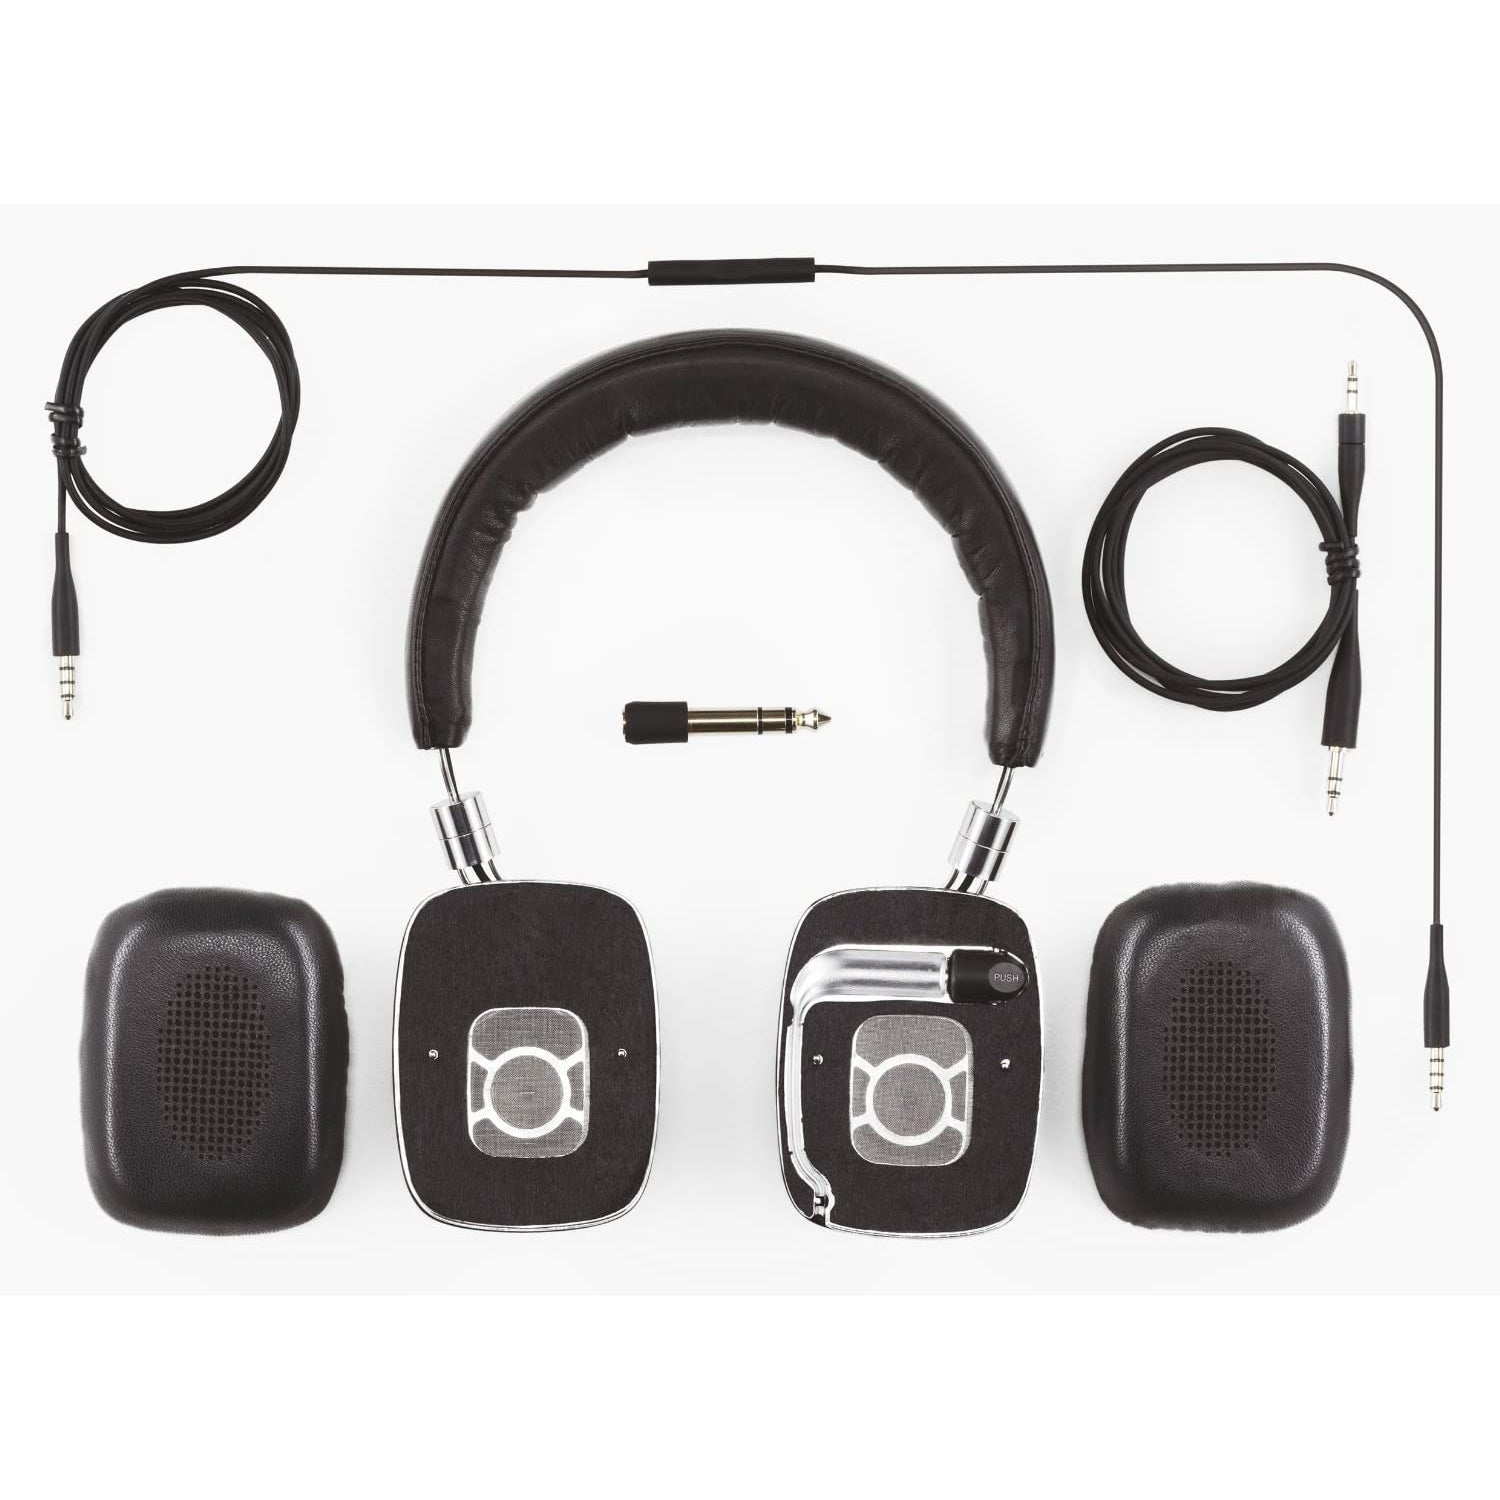 Bowers & Wilkins P5 On-Ear Headphones - Black - Grade C